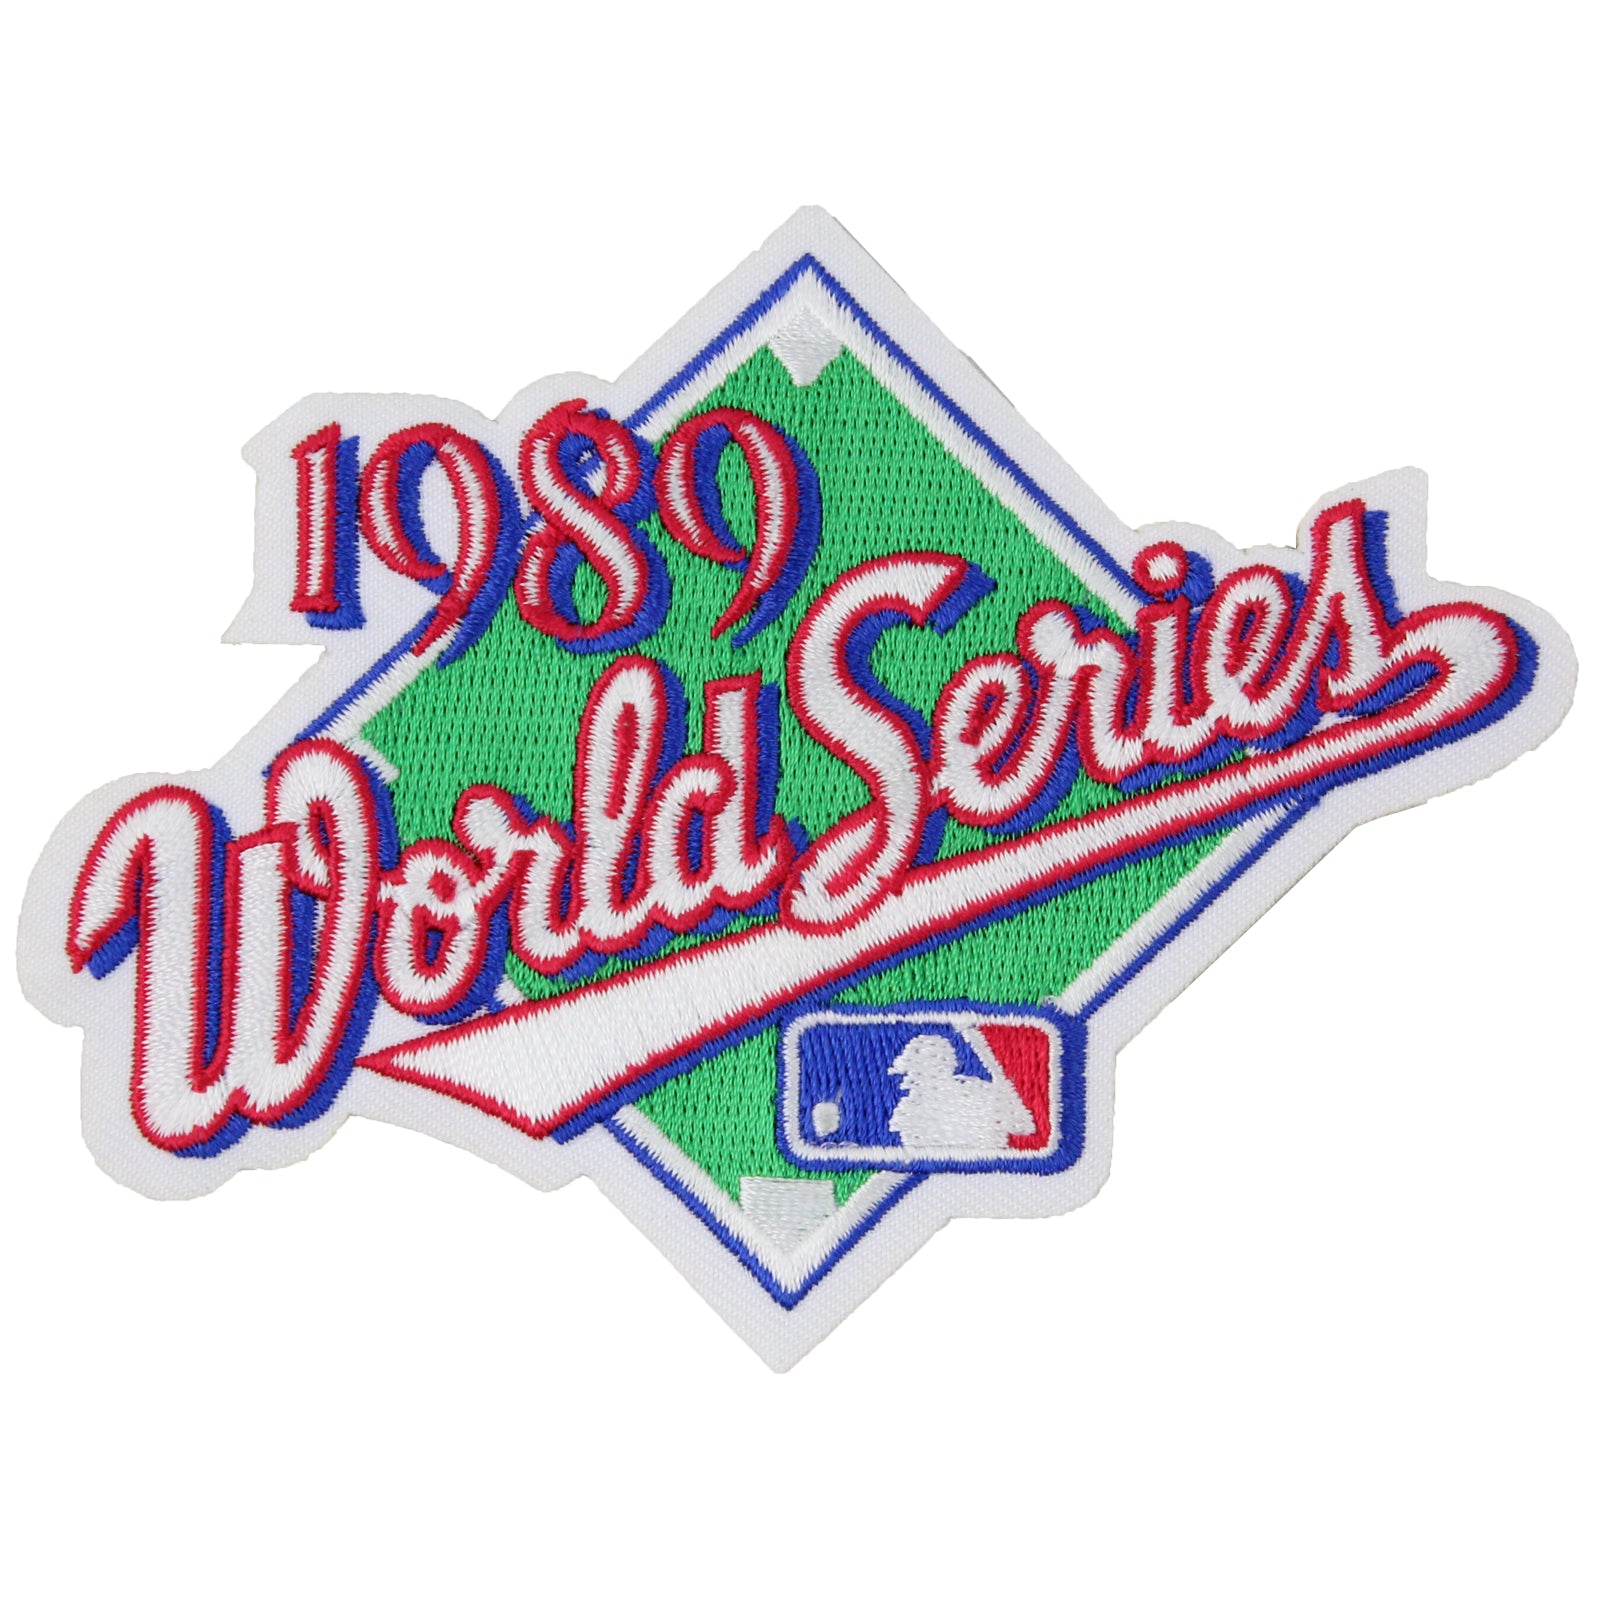 MLB World Series Alternate Logo (2019) - 2019 World Series Logo - Full  wordmark on one line on diamond